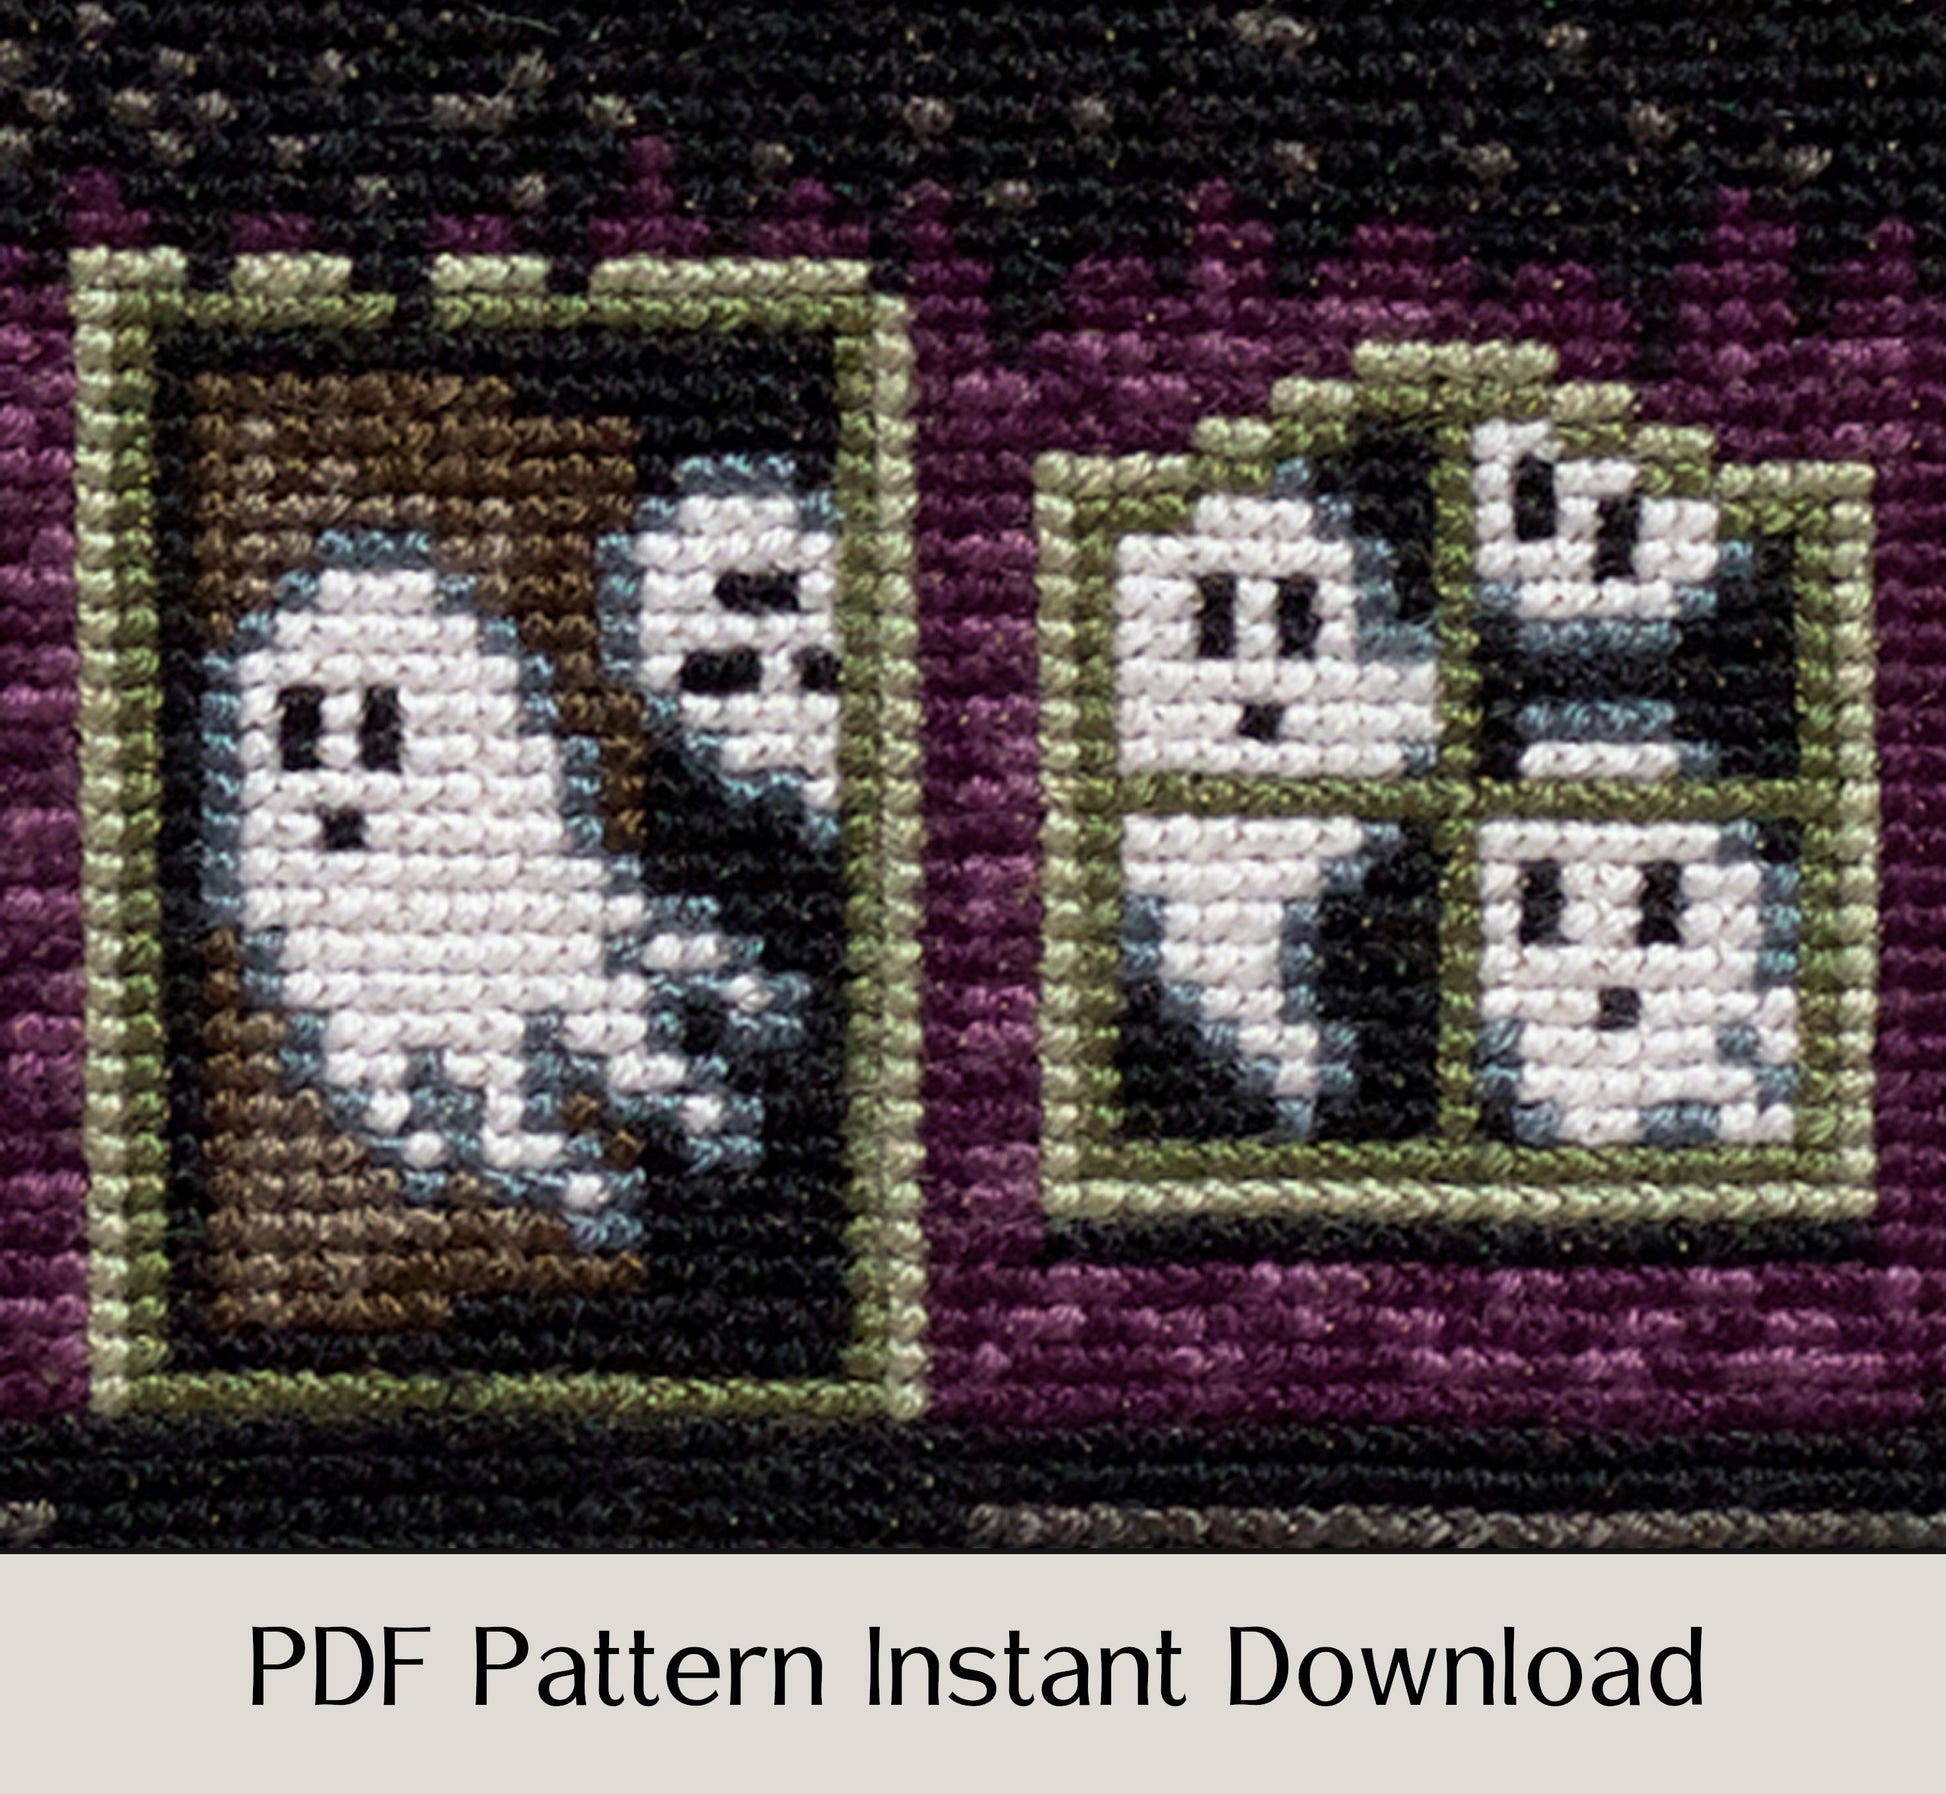 FO] Cute little glow-in-the-dark ghosties. Pattern by LolaCrowCrossStitch.  : r/CrossStitch